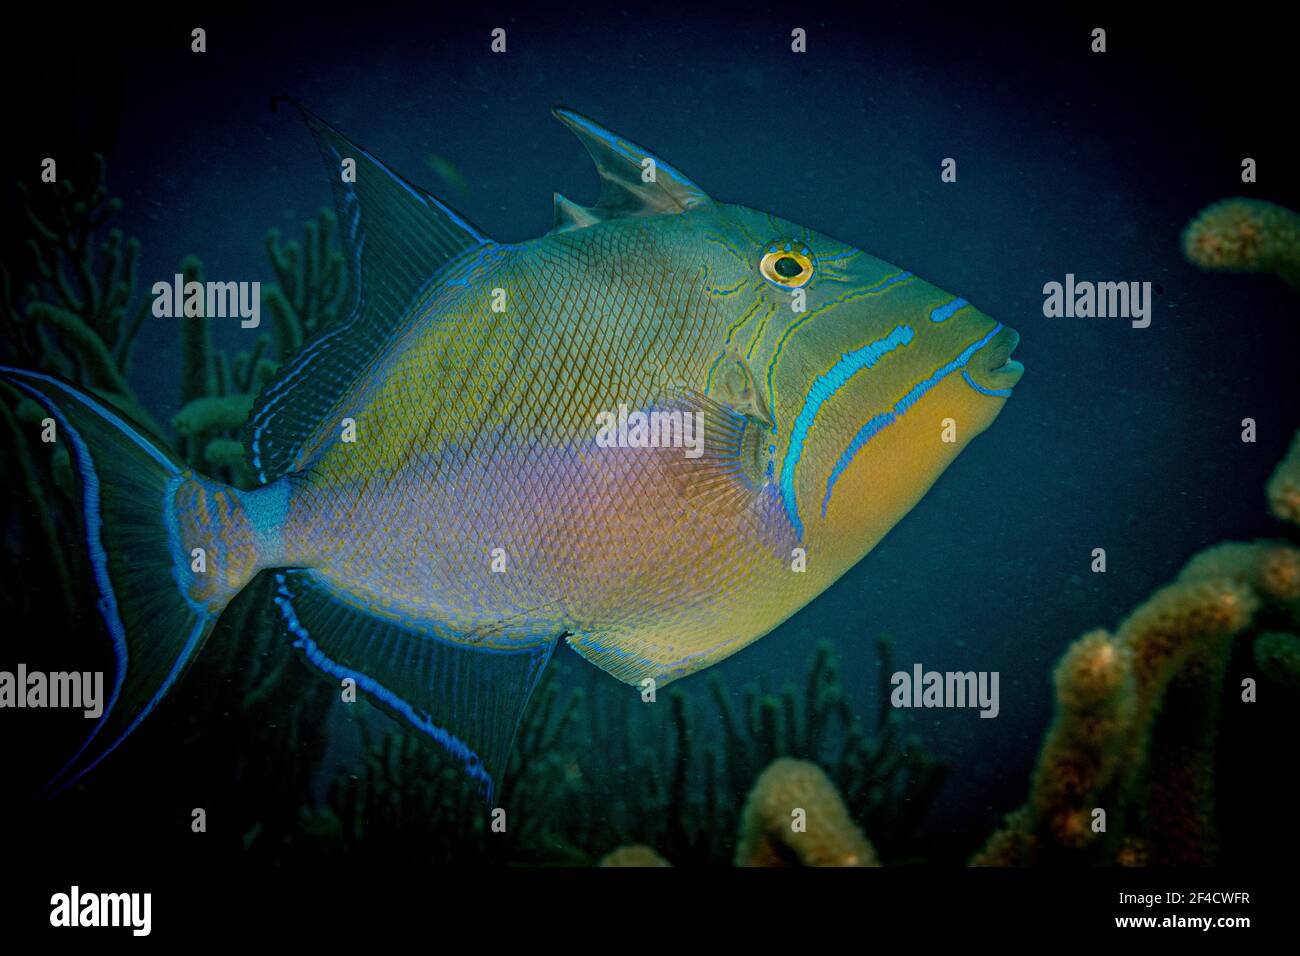 Regina triggerfish (Balistes vetula) sulla barriera corallina al largo dell'isola di Sint Maarten, Caraibi olandesi Foto Stock